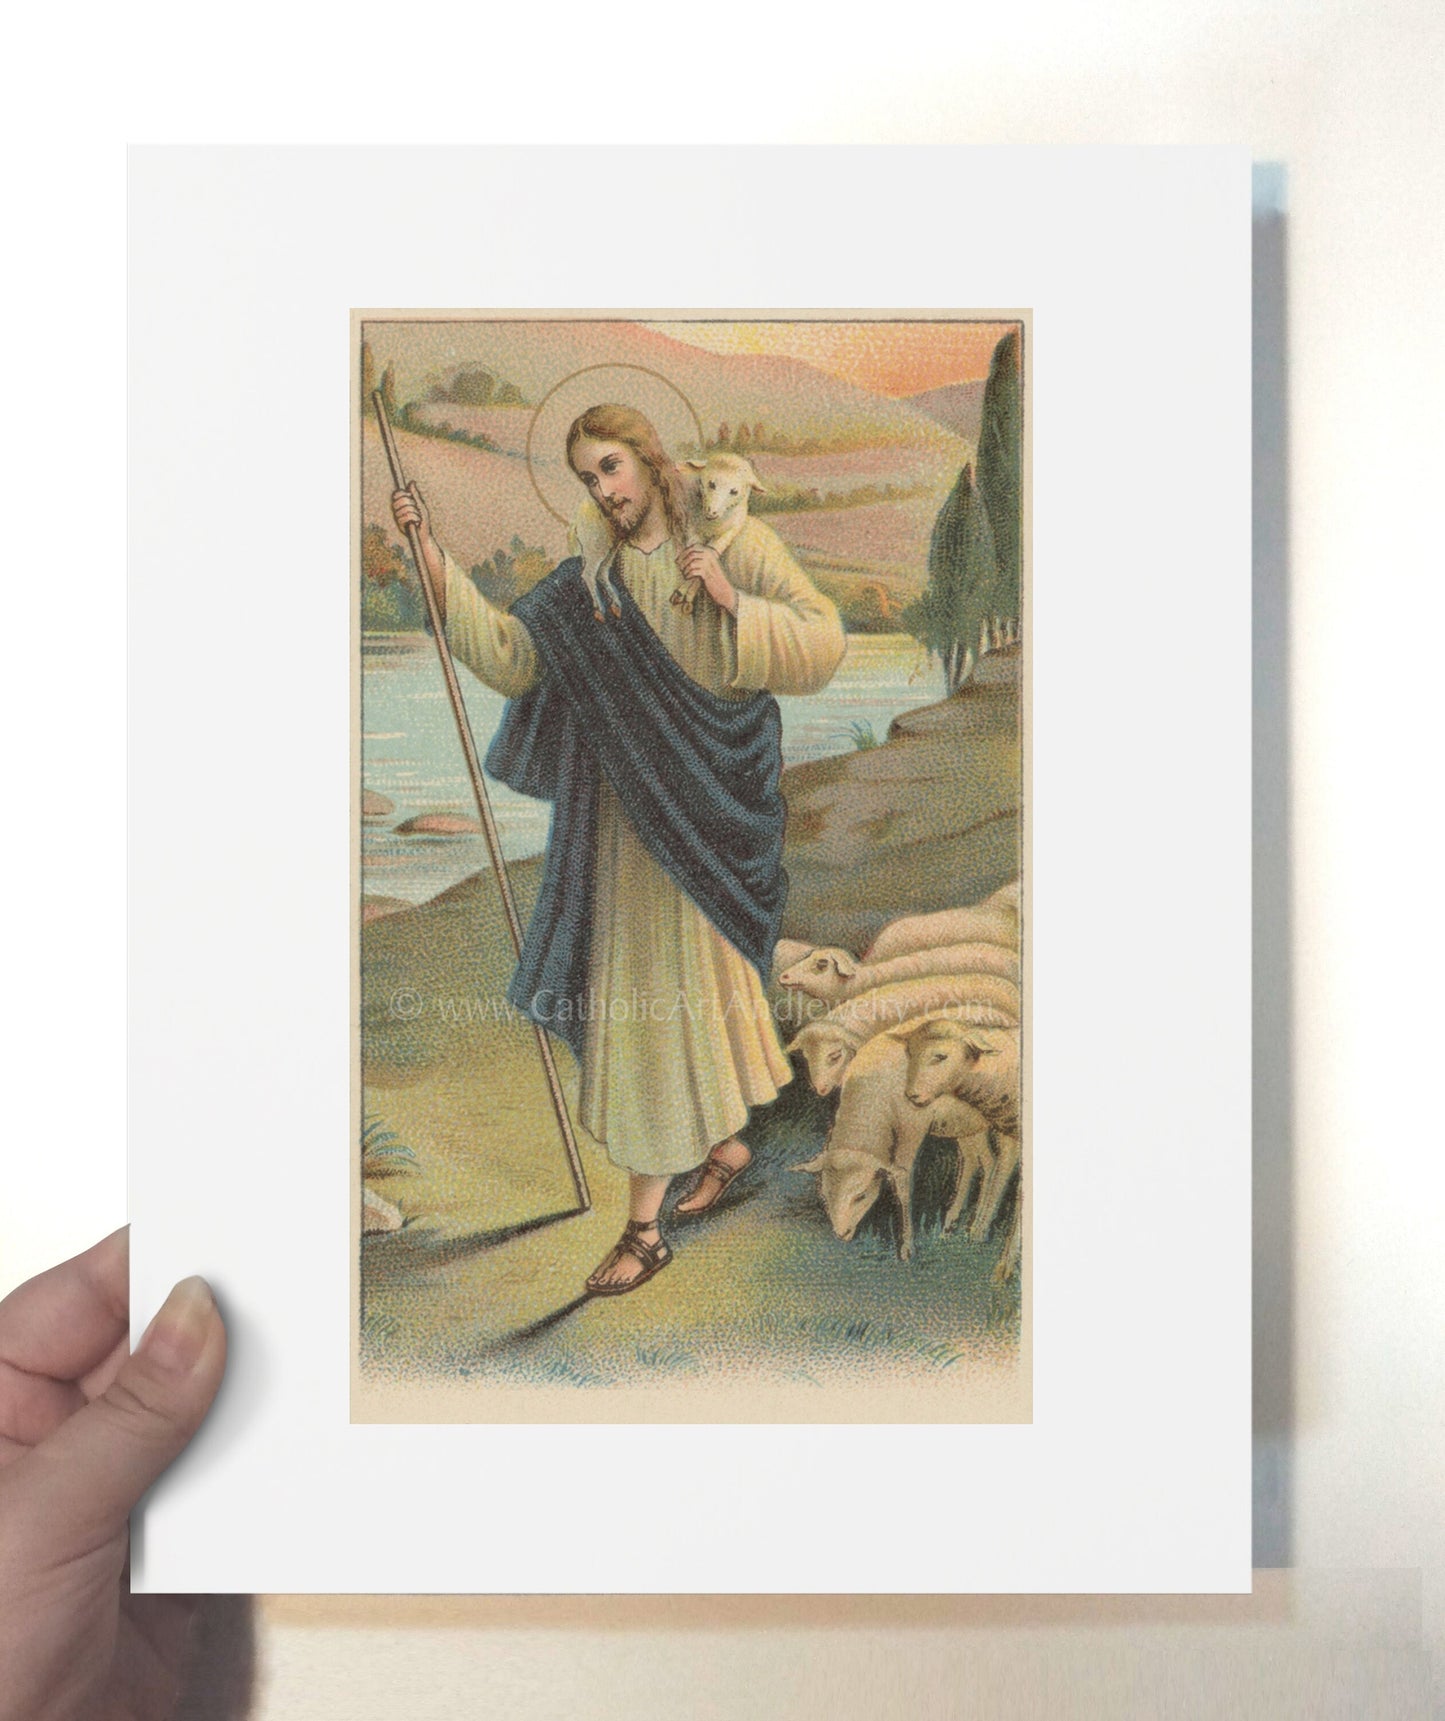 The Good Shepherd – based on a Vintage Prayer Card – Christian Art Print– Christian Gift